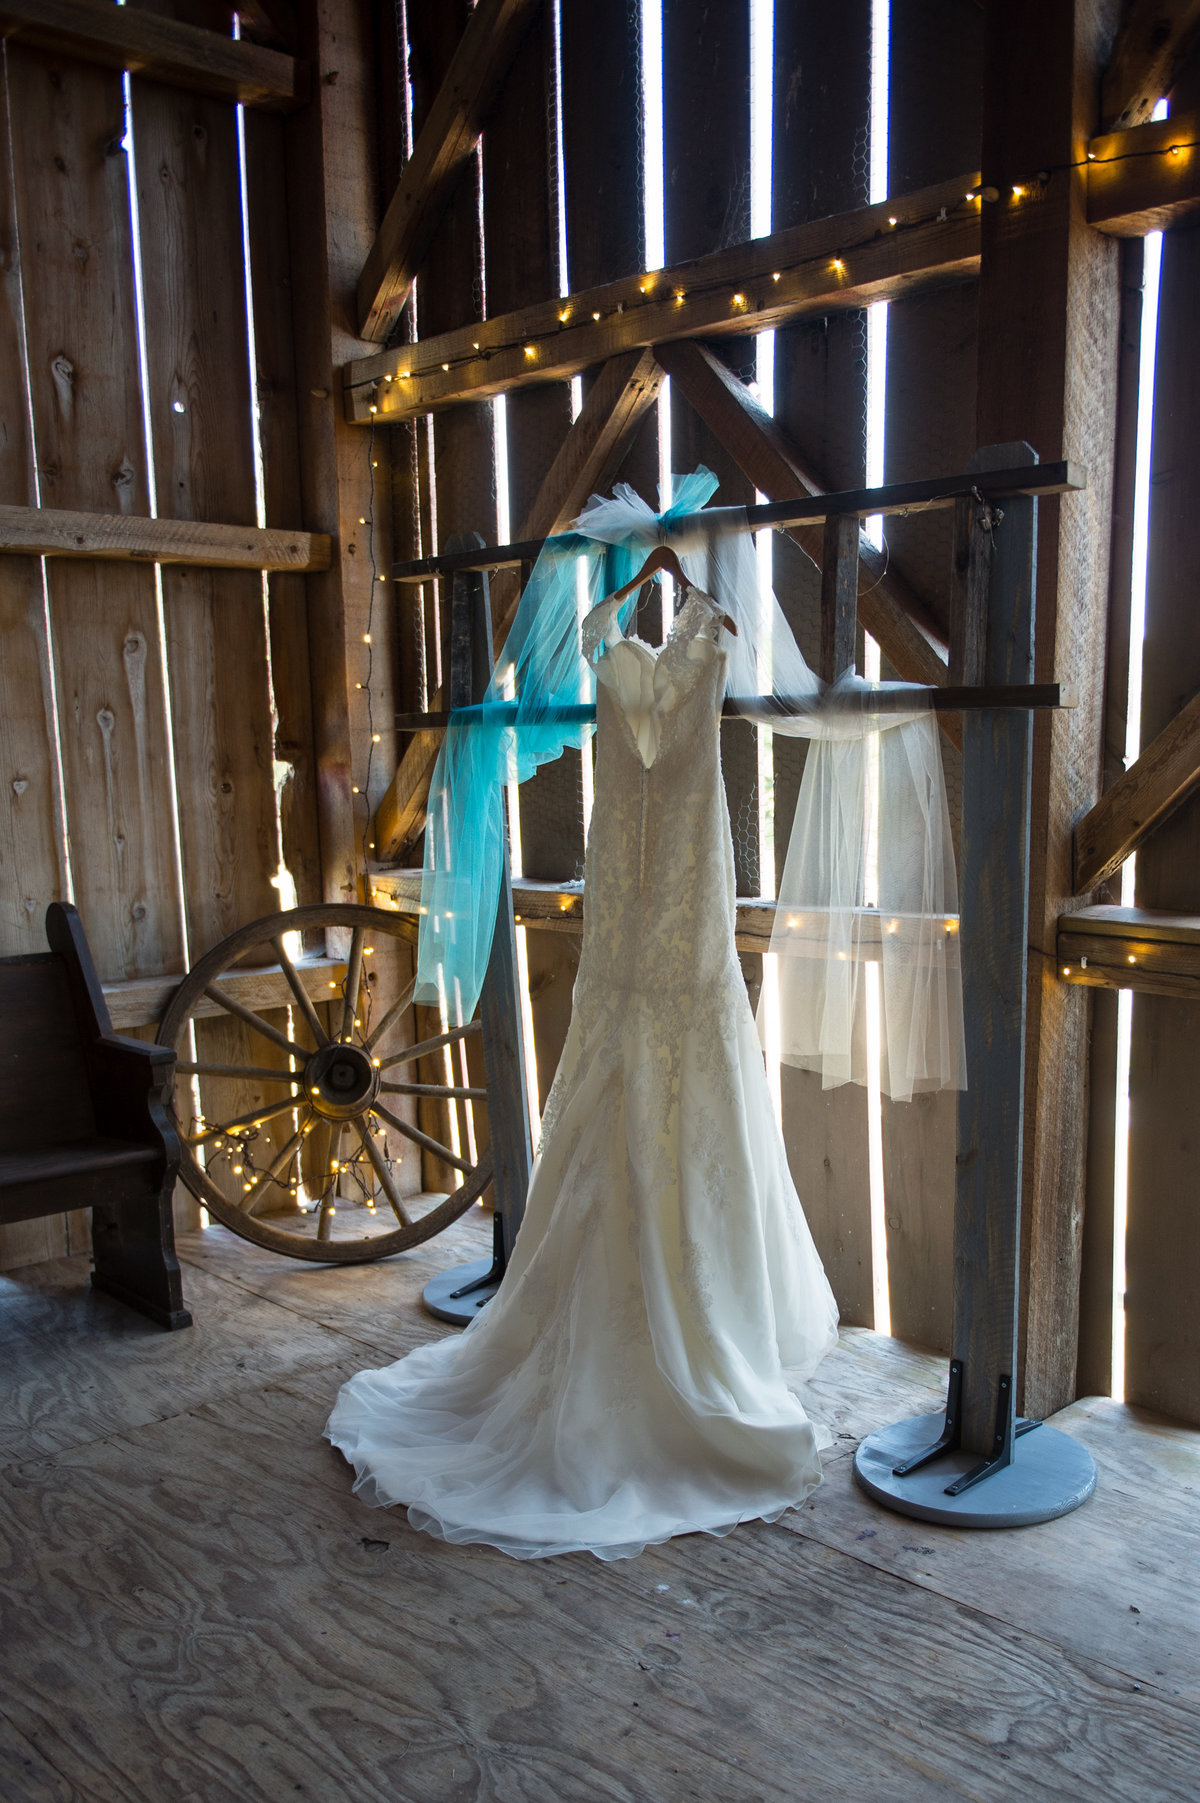 dress hanging in barn with wagon wheel